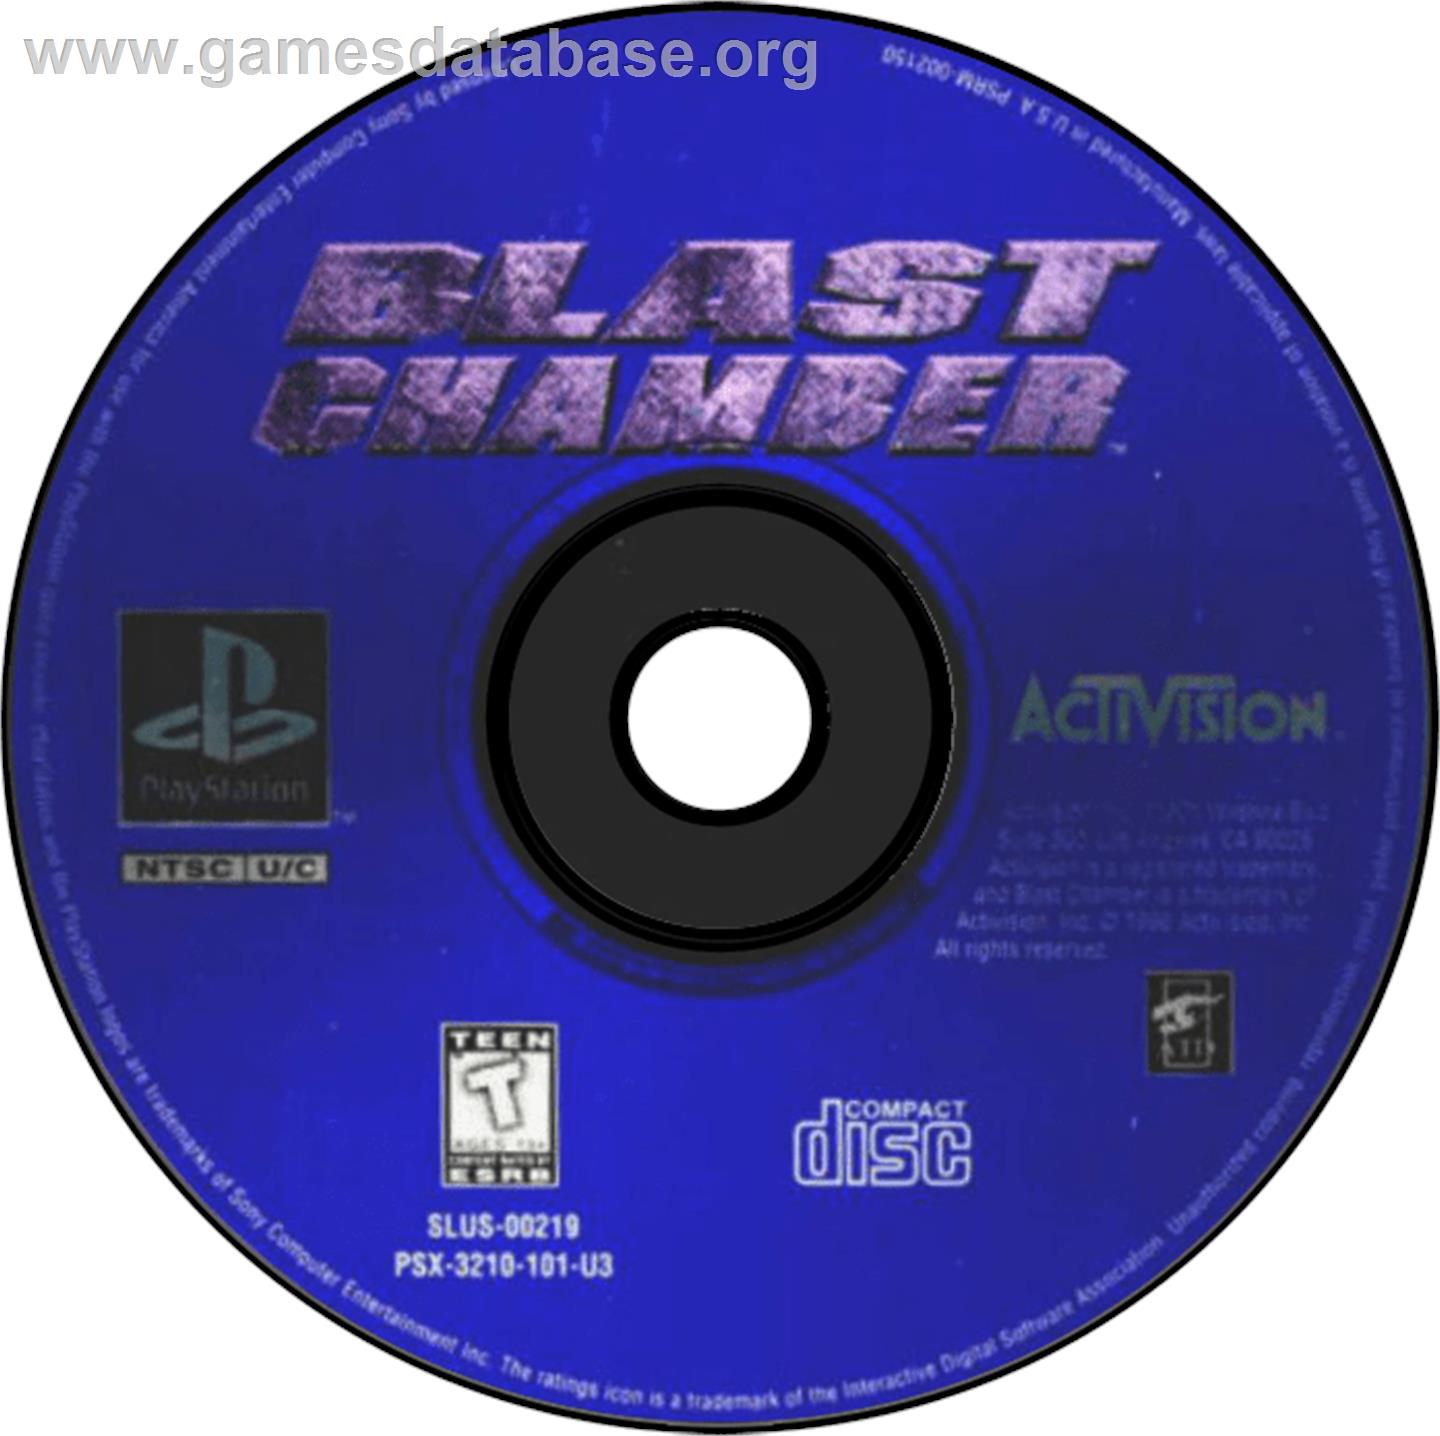 Blast Chamber - Sony Playstation - Artwork - Disc